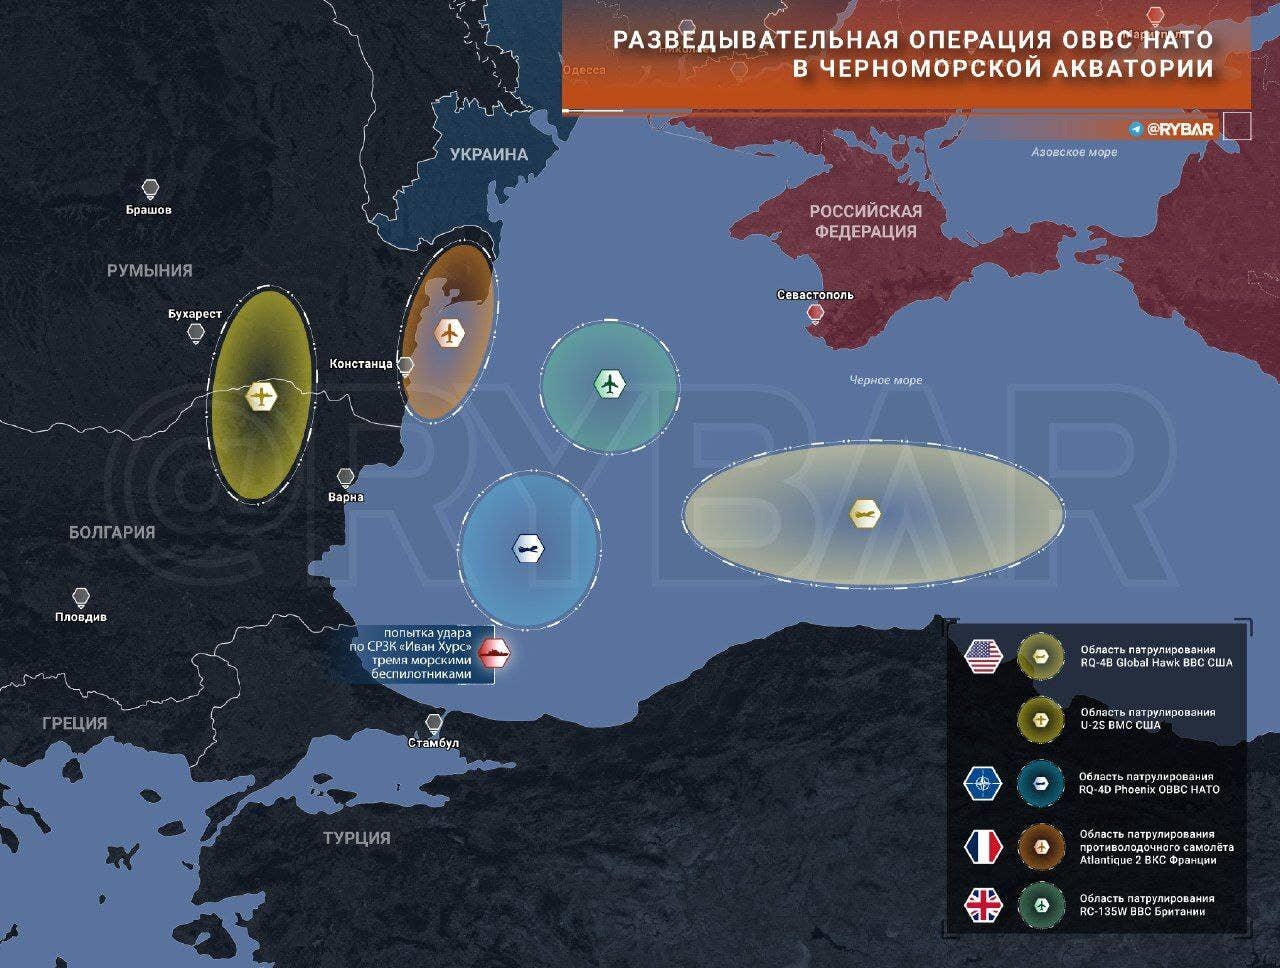 Russia Claims Ukrainian Drone Boats Attacked Its Navy Ship Off Turkey